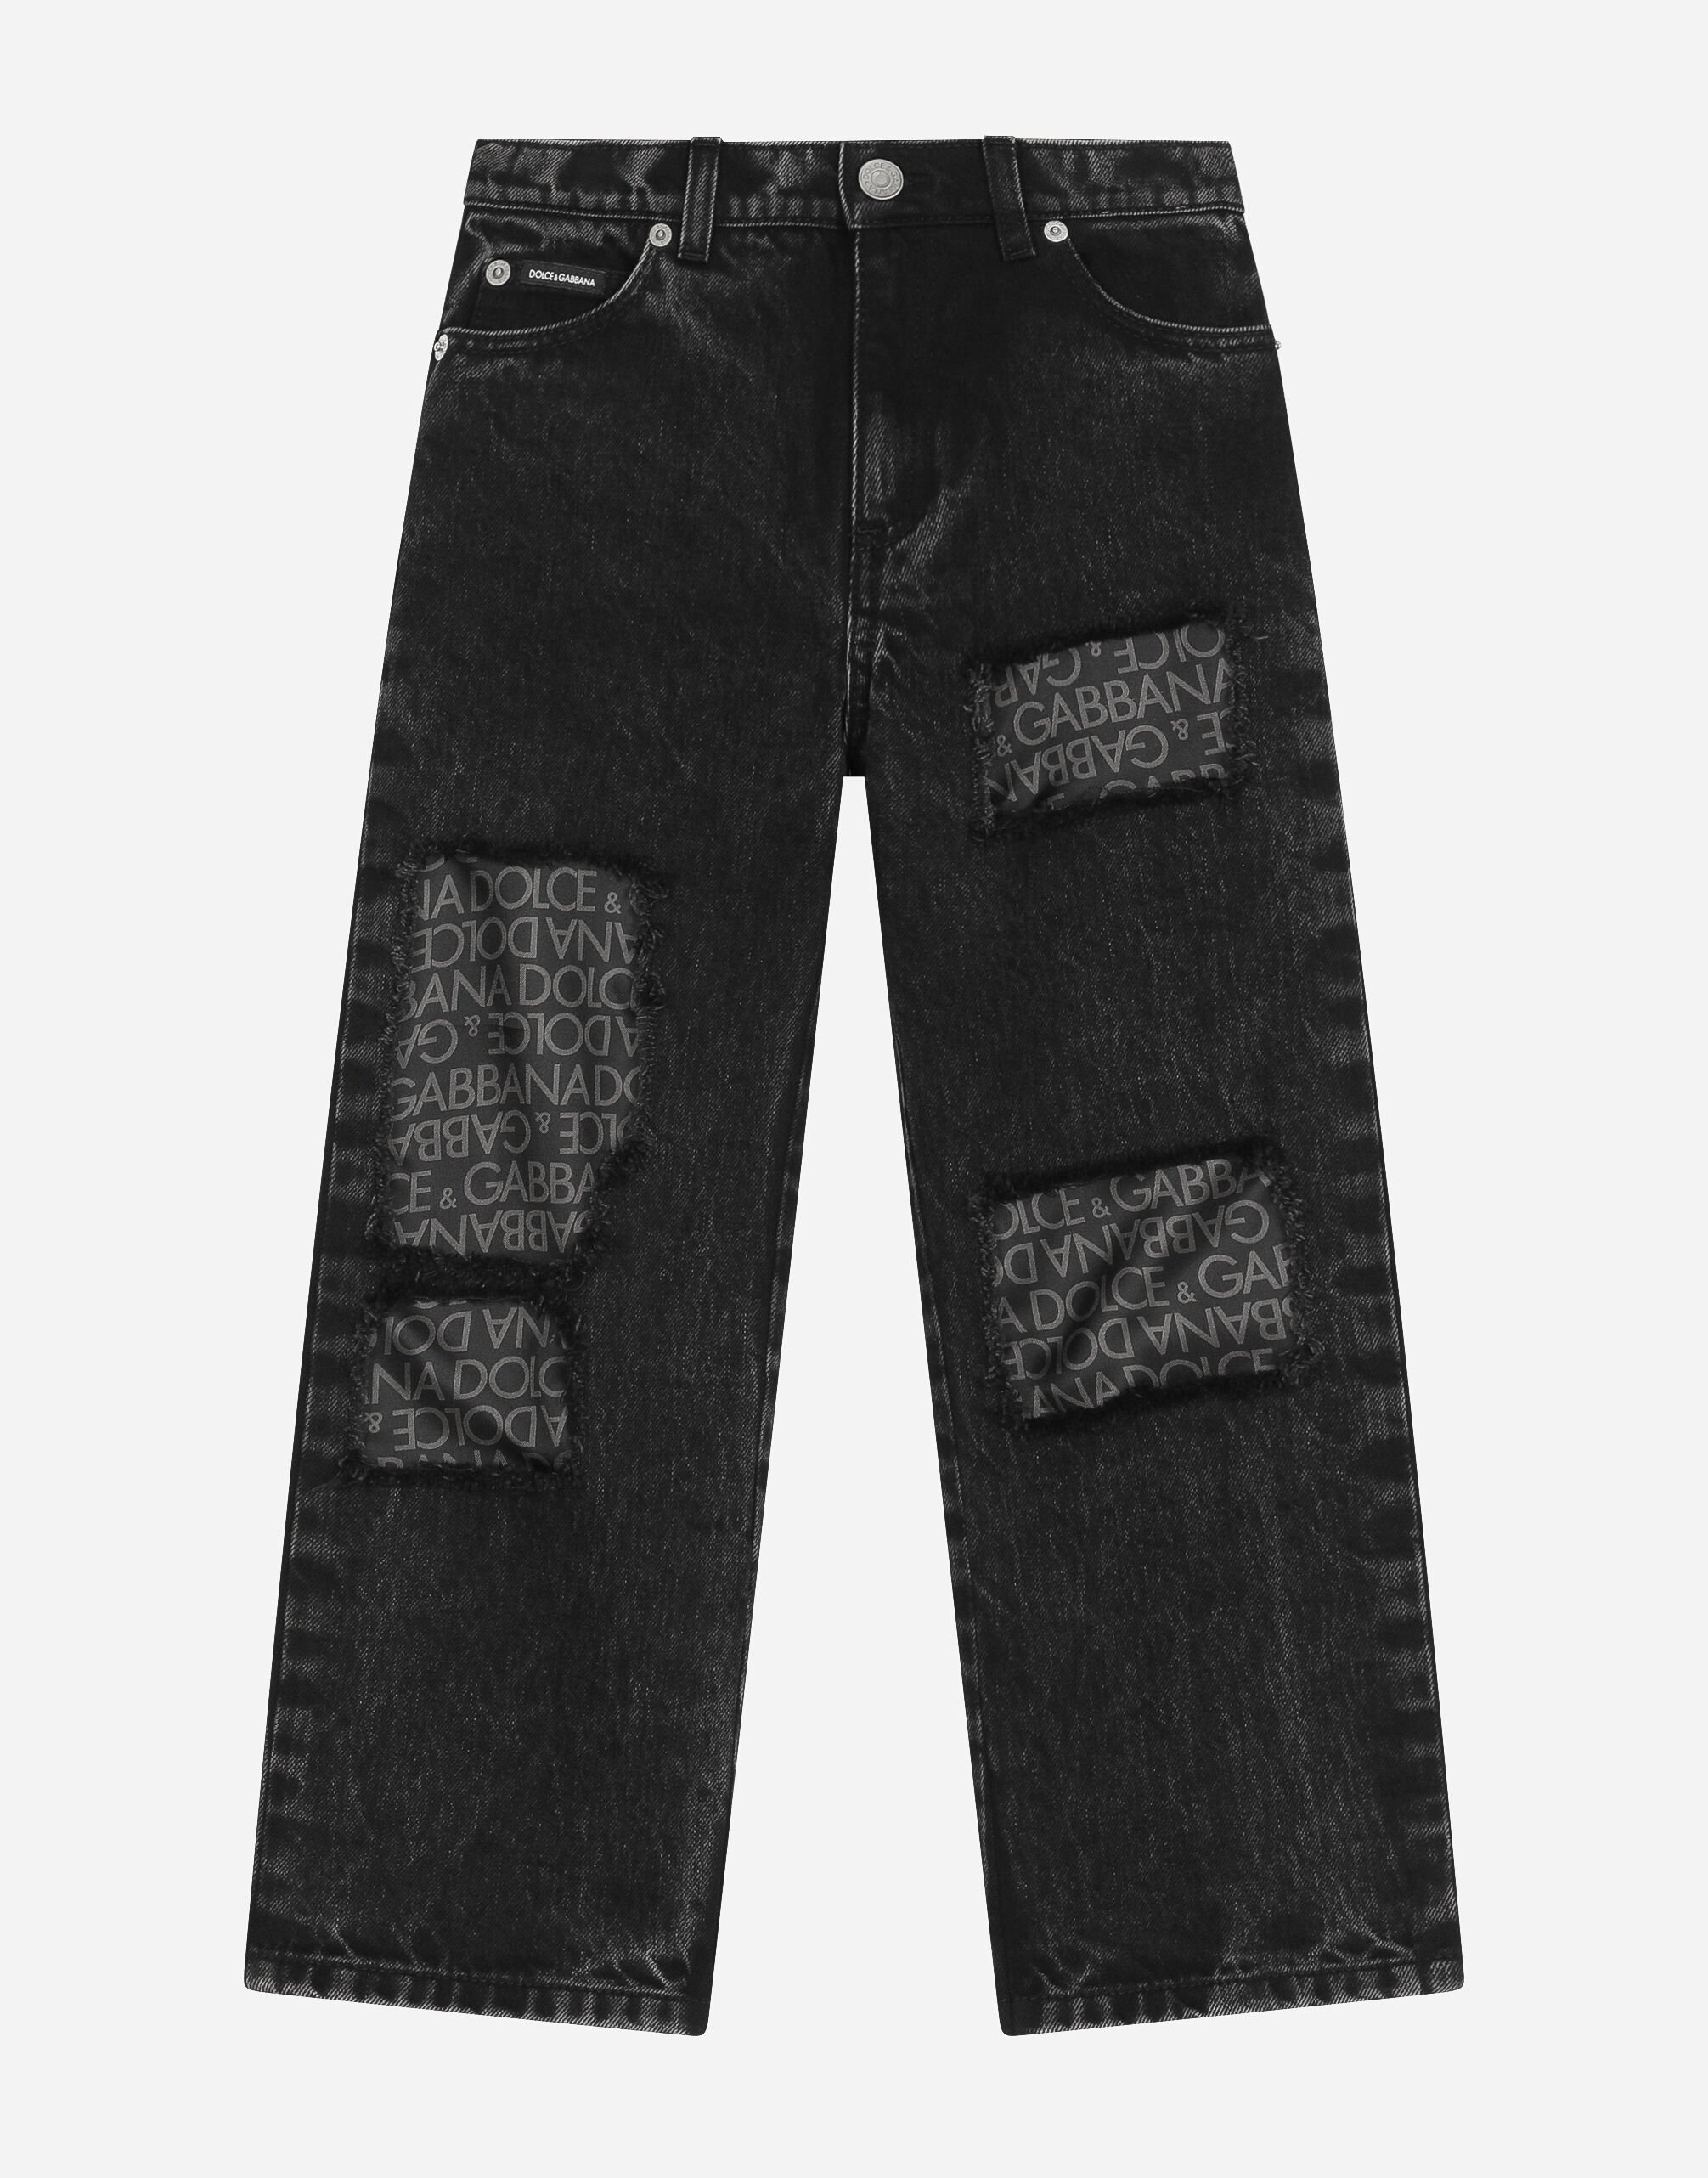 ${brand} 5-pocket jeans with silk twill interior ${colorDescription} ${masterID}